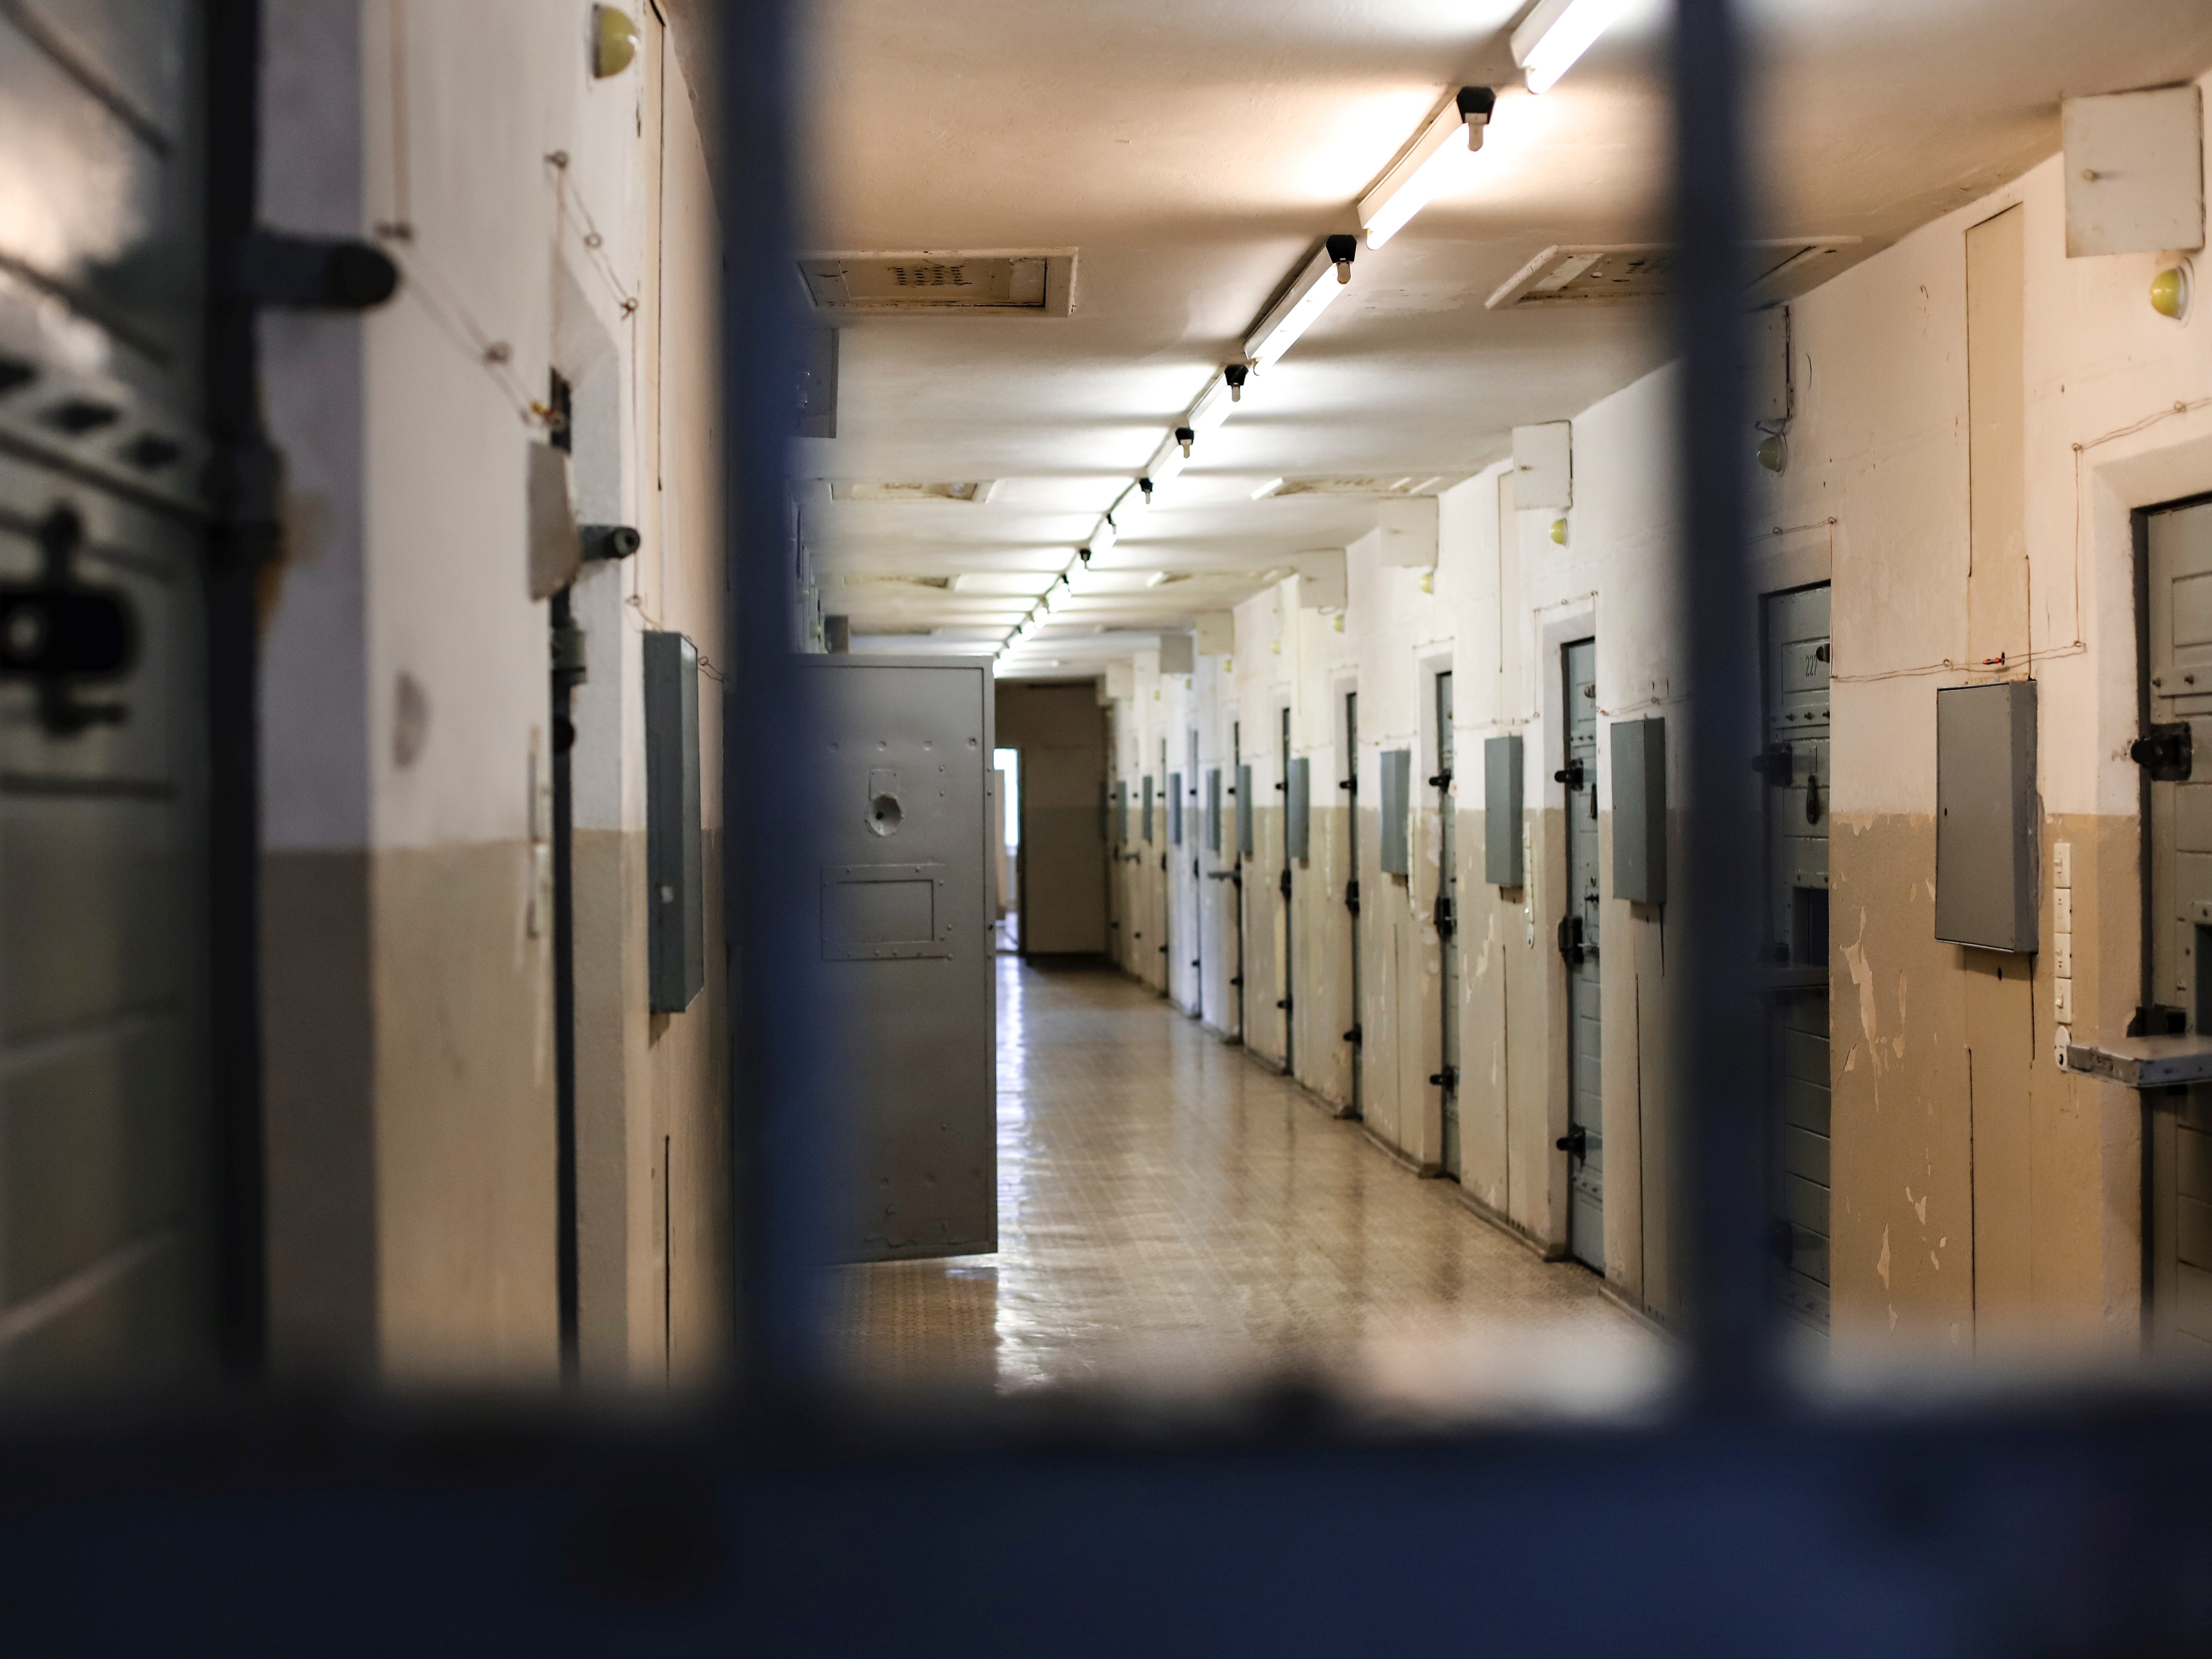 Prison hallway through bars